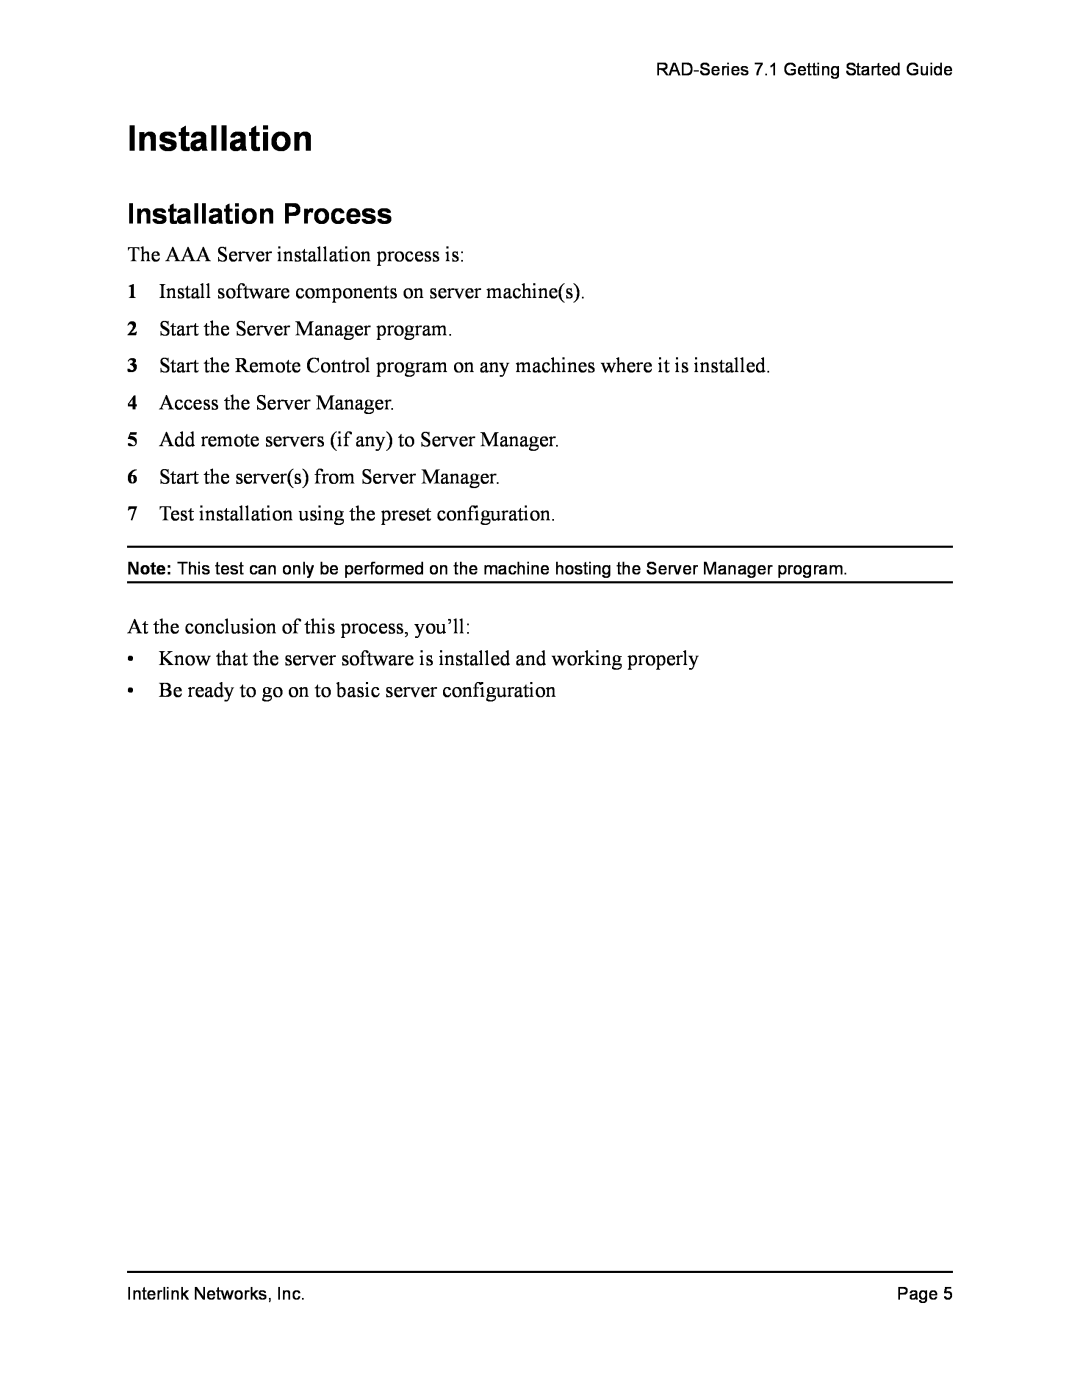 Interlink electronic 7.1 manual Installation Process 